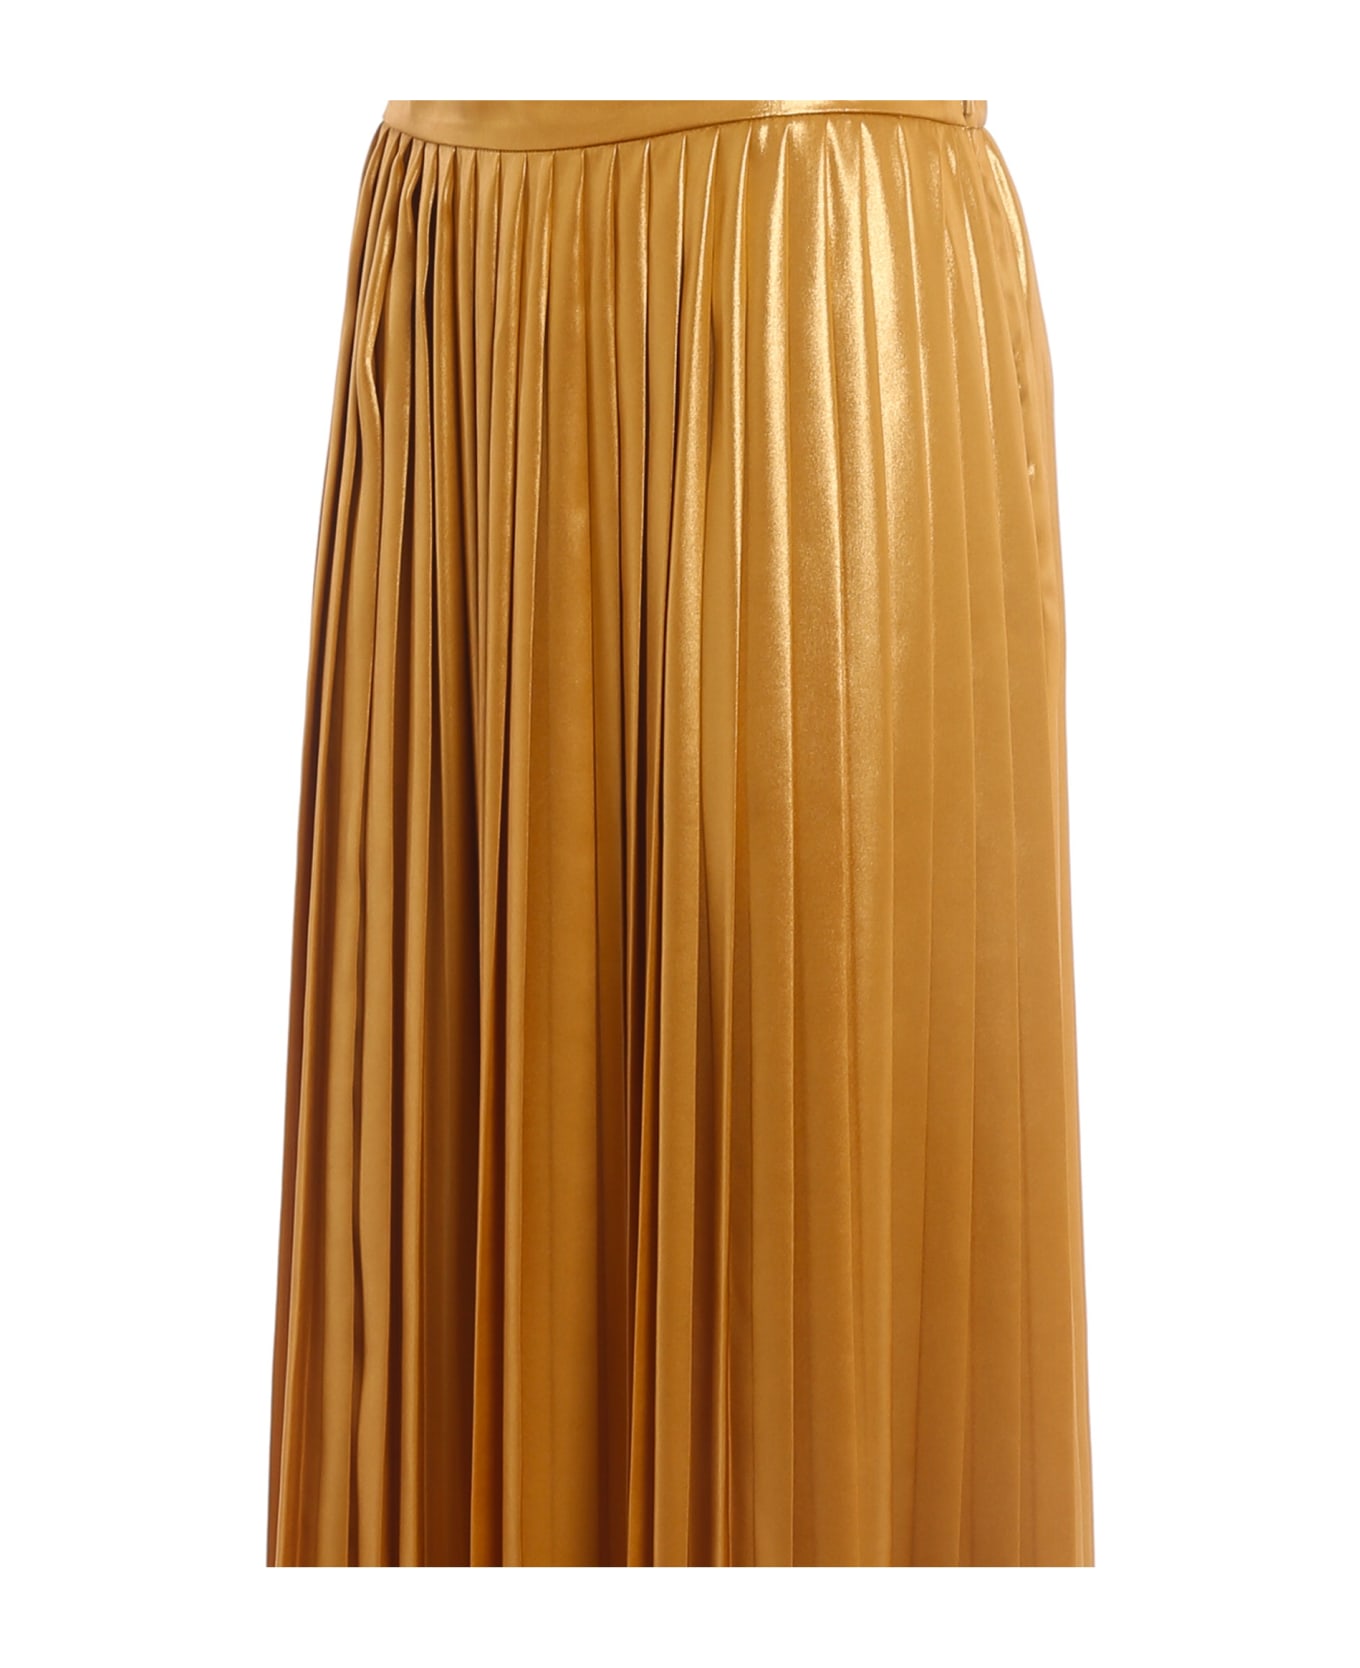 Max Mara Studio Studio Fragola Skirt - Gold スカート